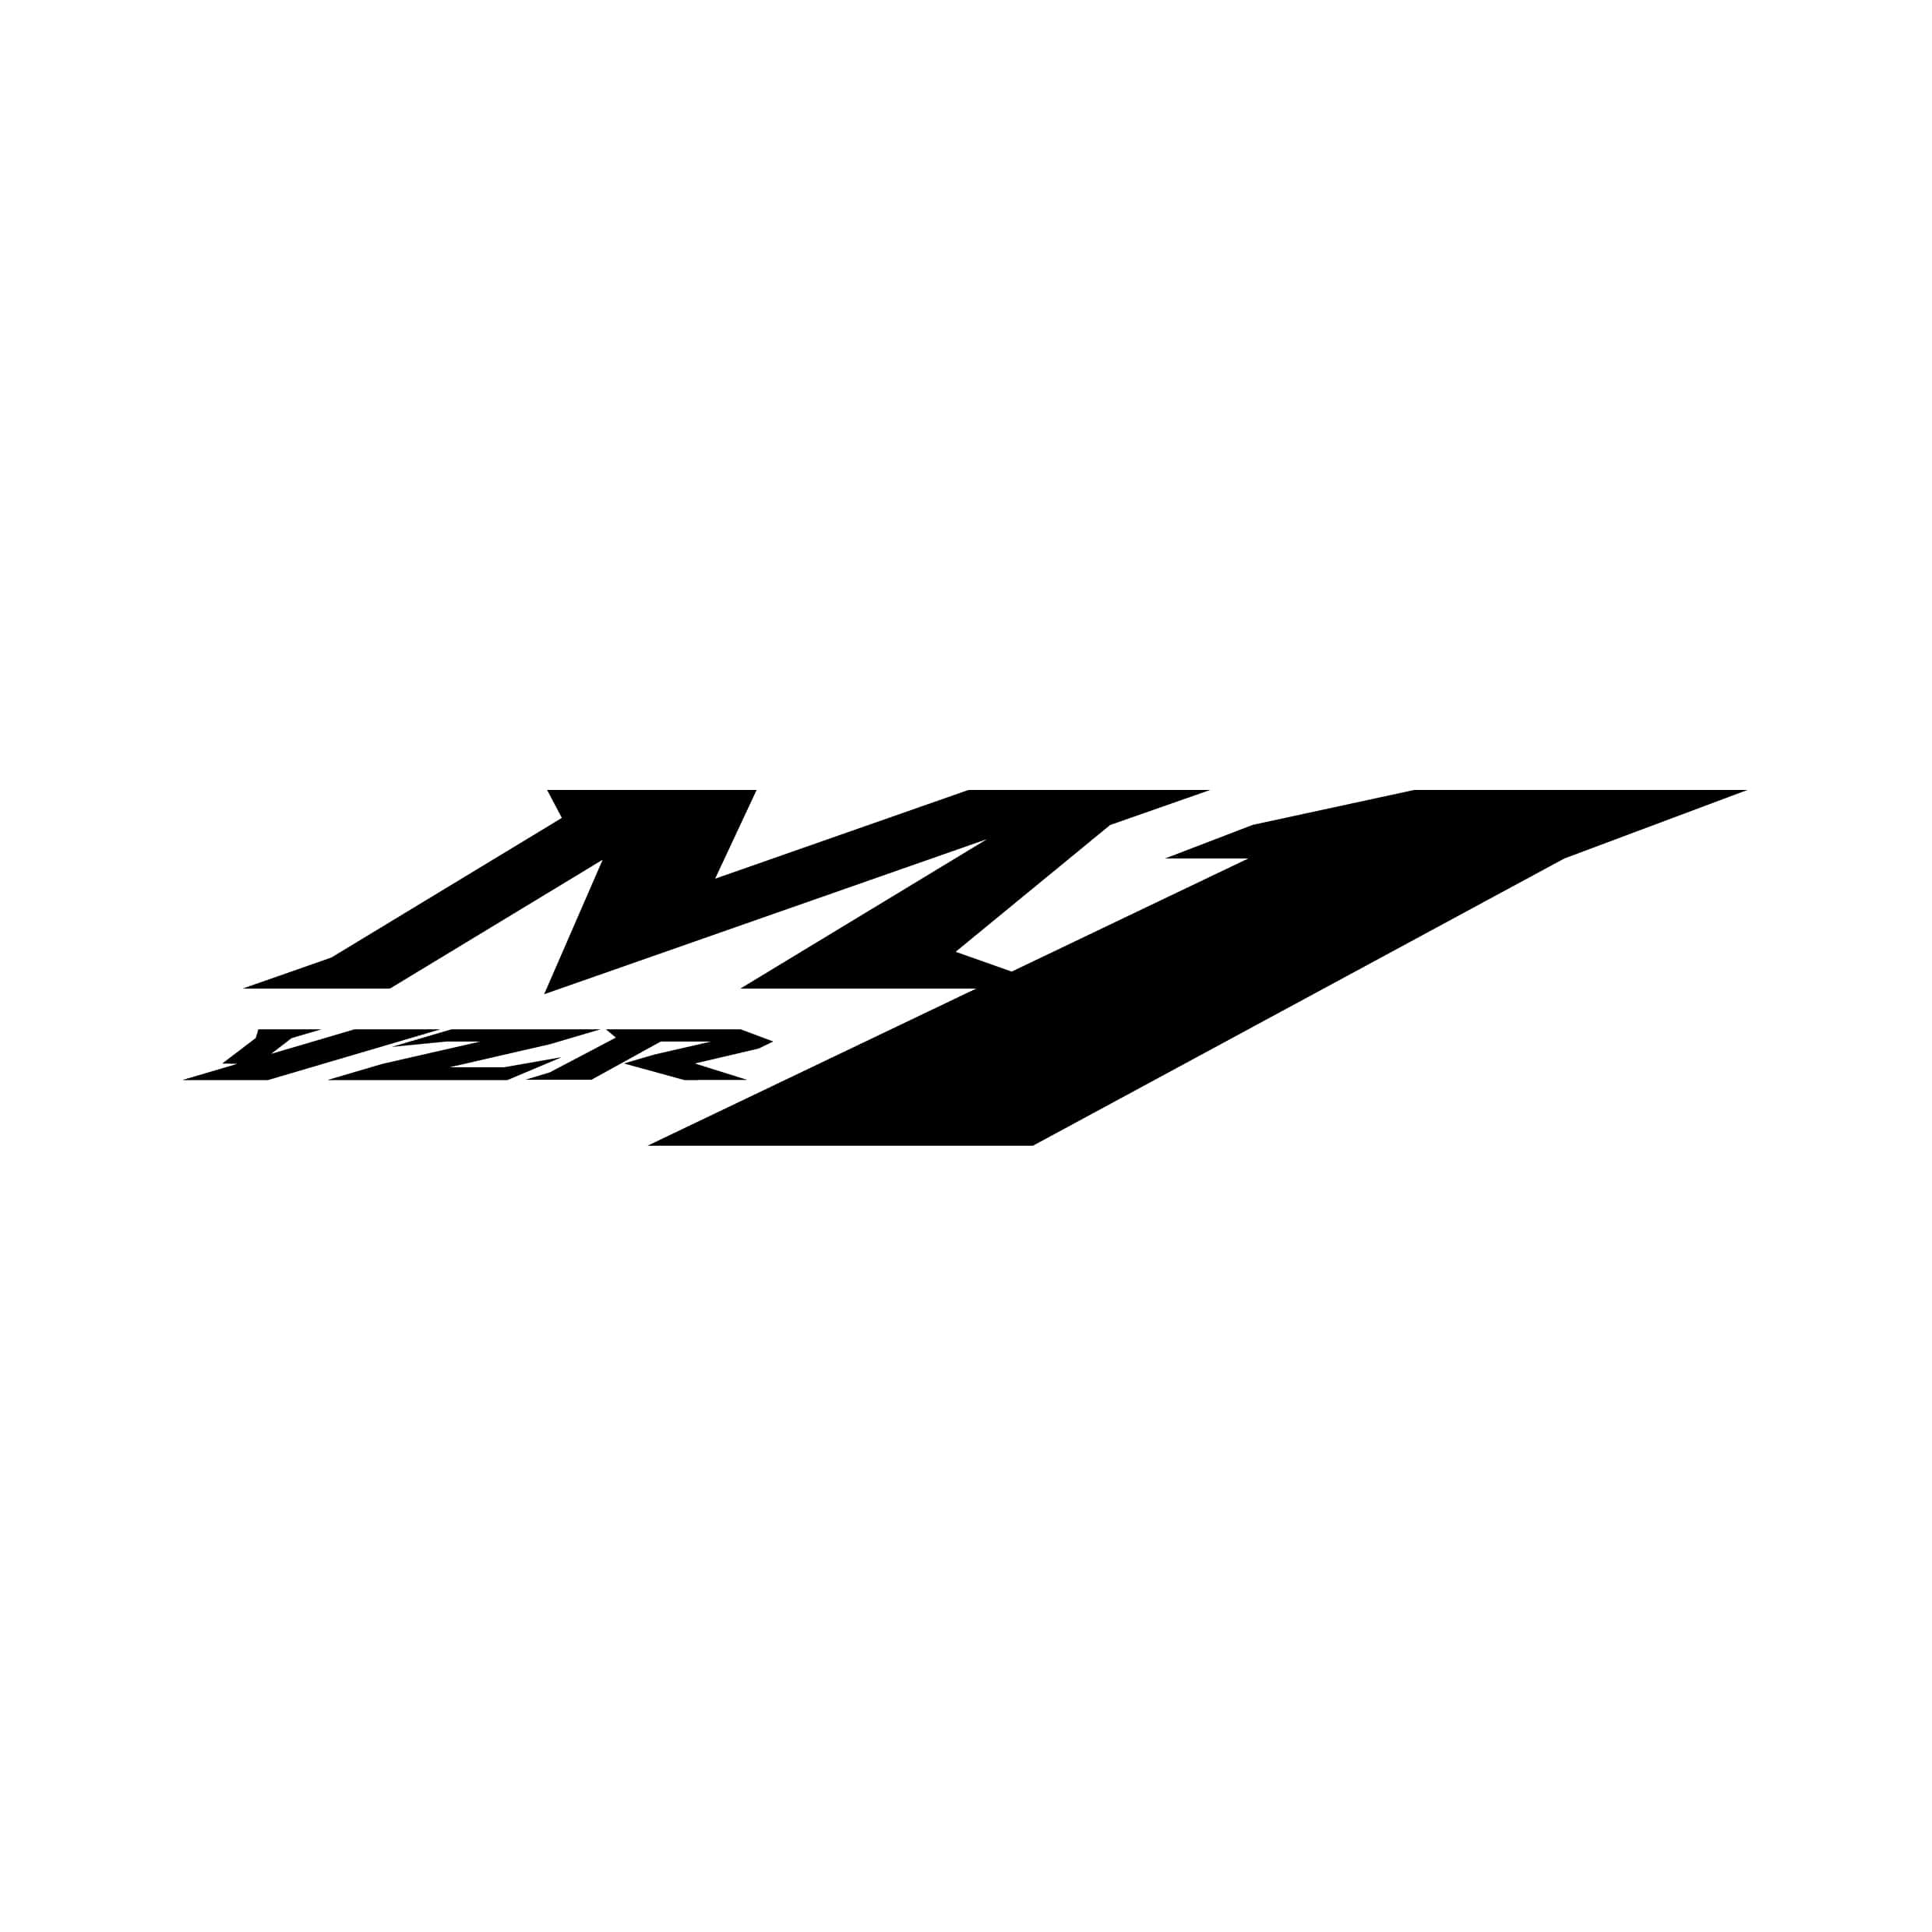 stickers-m1-yzr-yamaha-ref82-autocollant-moto-sticker-deux-roue-autocollants-decals-sponsors-tuning-sport-logo-bike-scooter-min